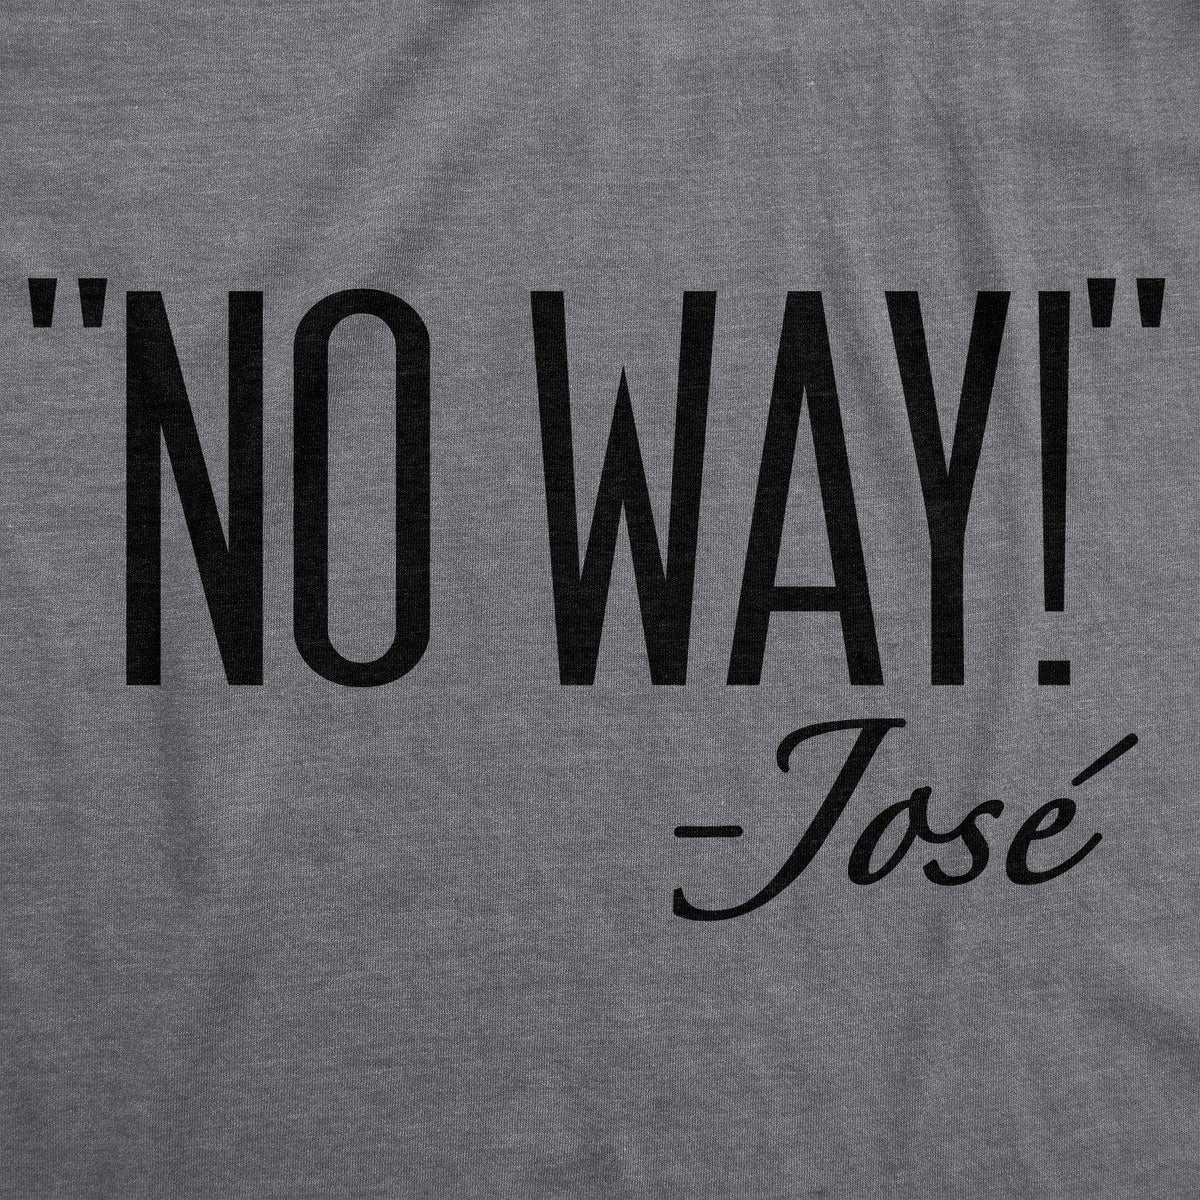 No Way Jose Men&#39;s Tshirt - Crazy Dog T-Shirts